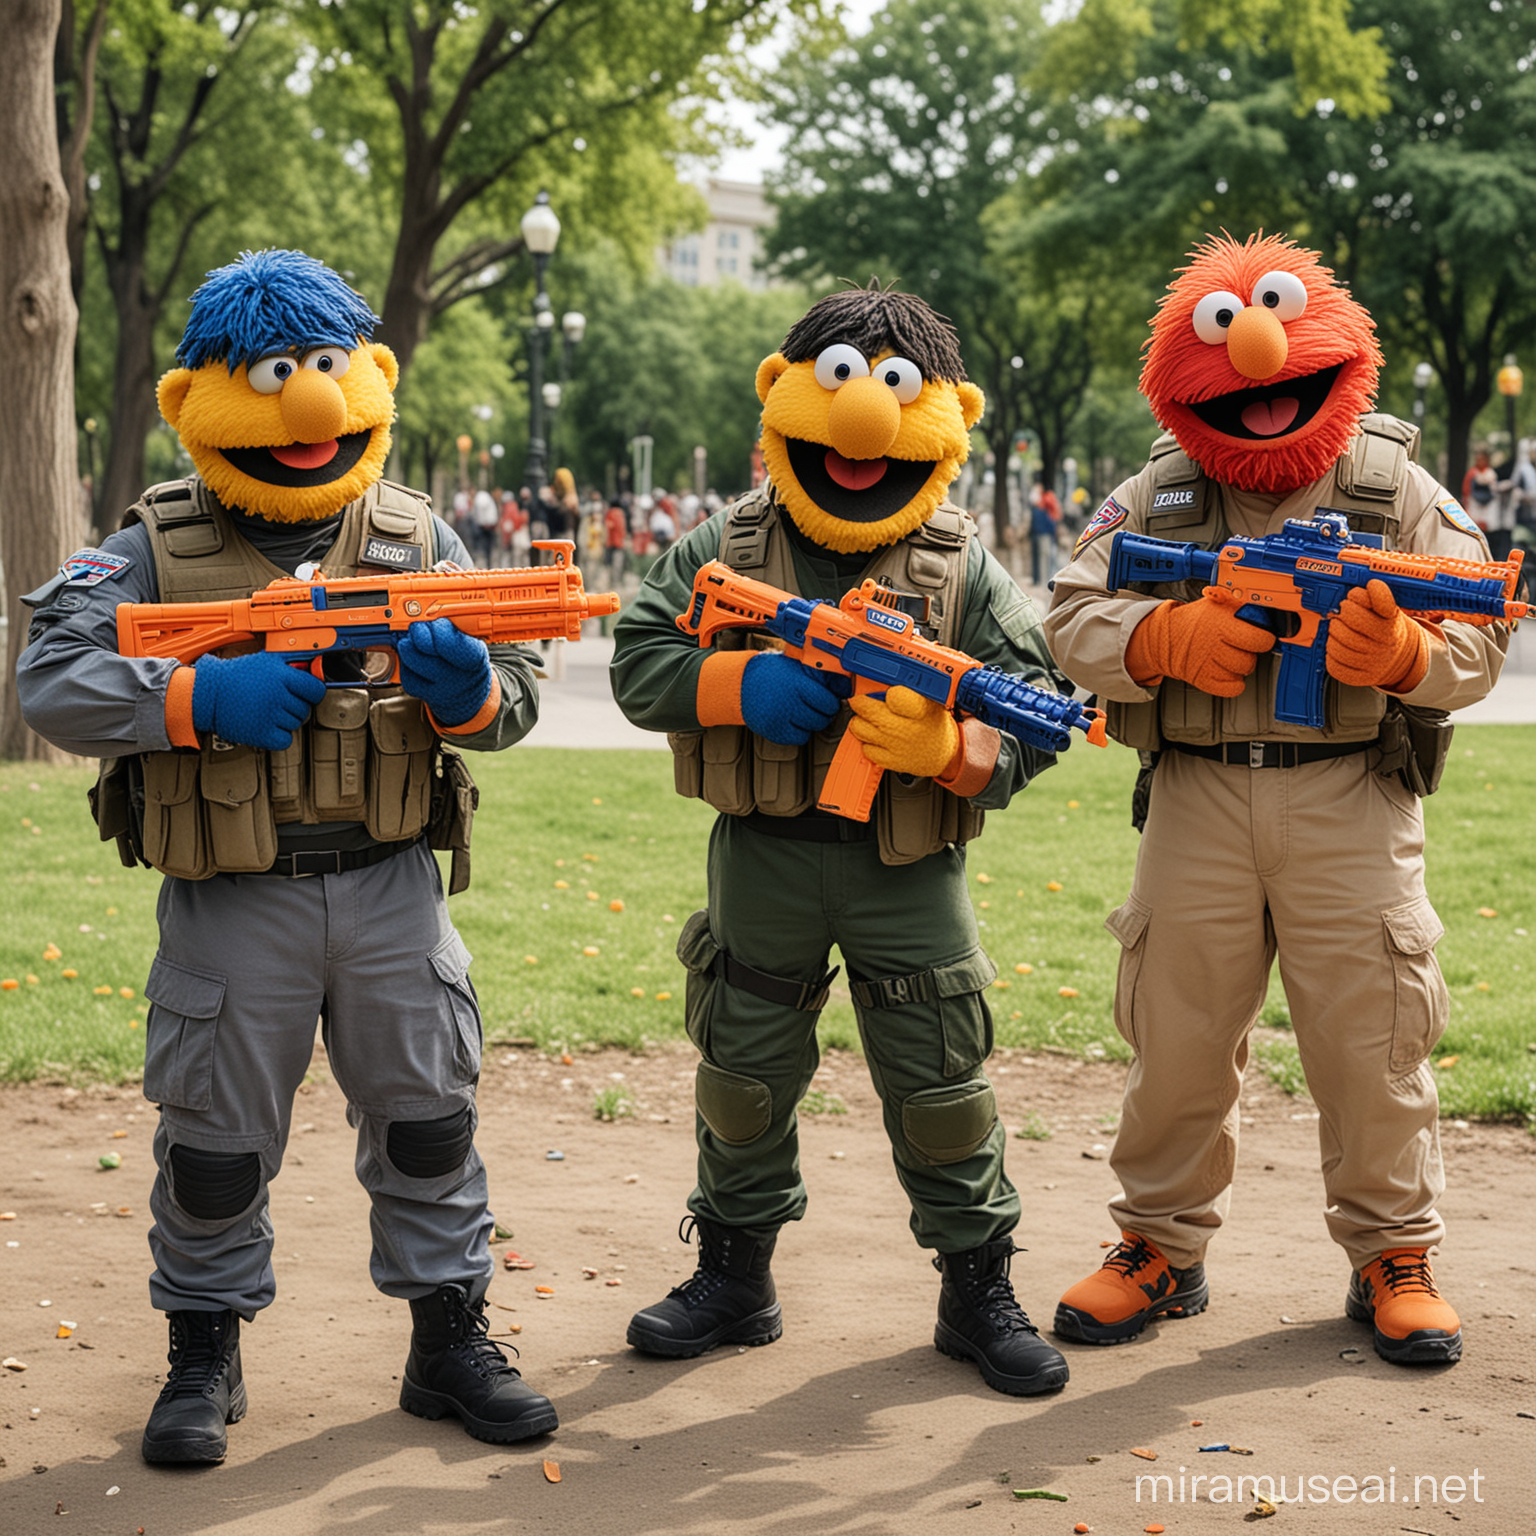 Sesame Street Characters in Combat Gear Playful Nerf Gun Battle at City Park